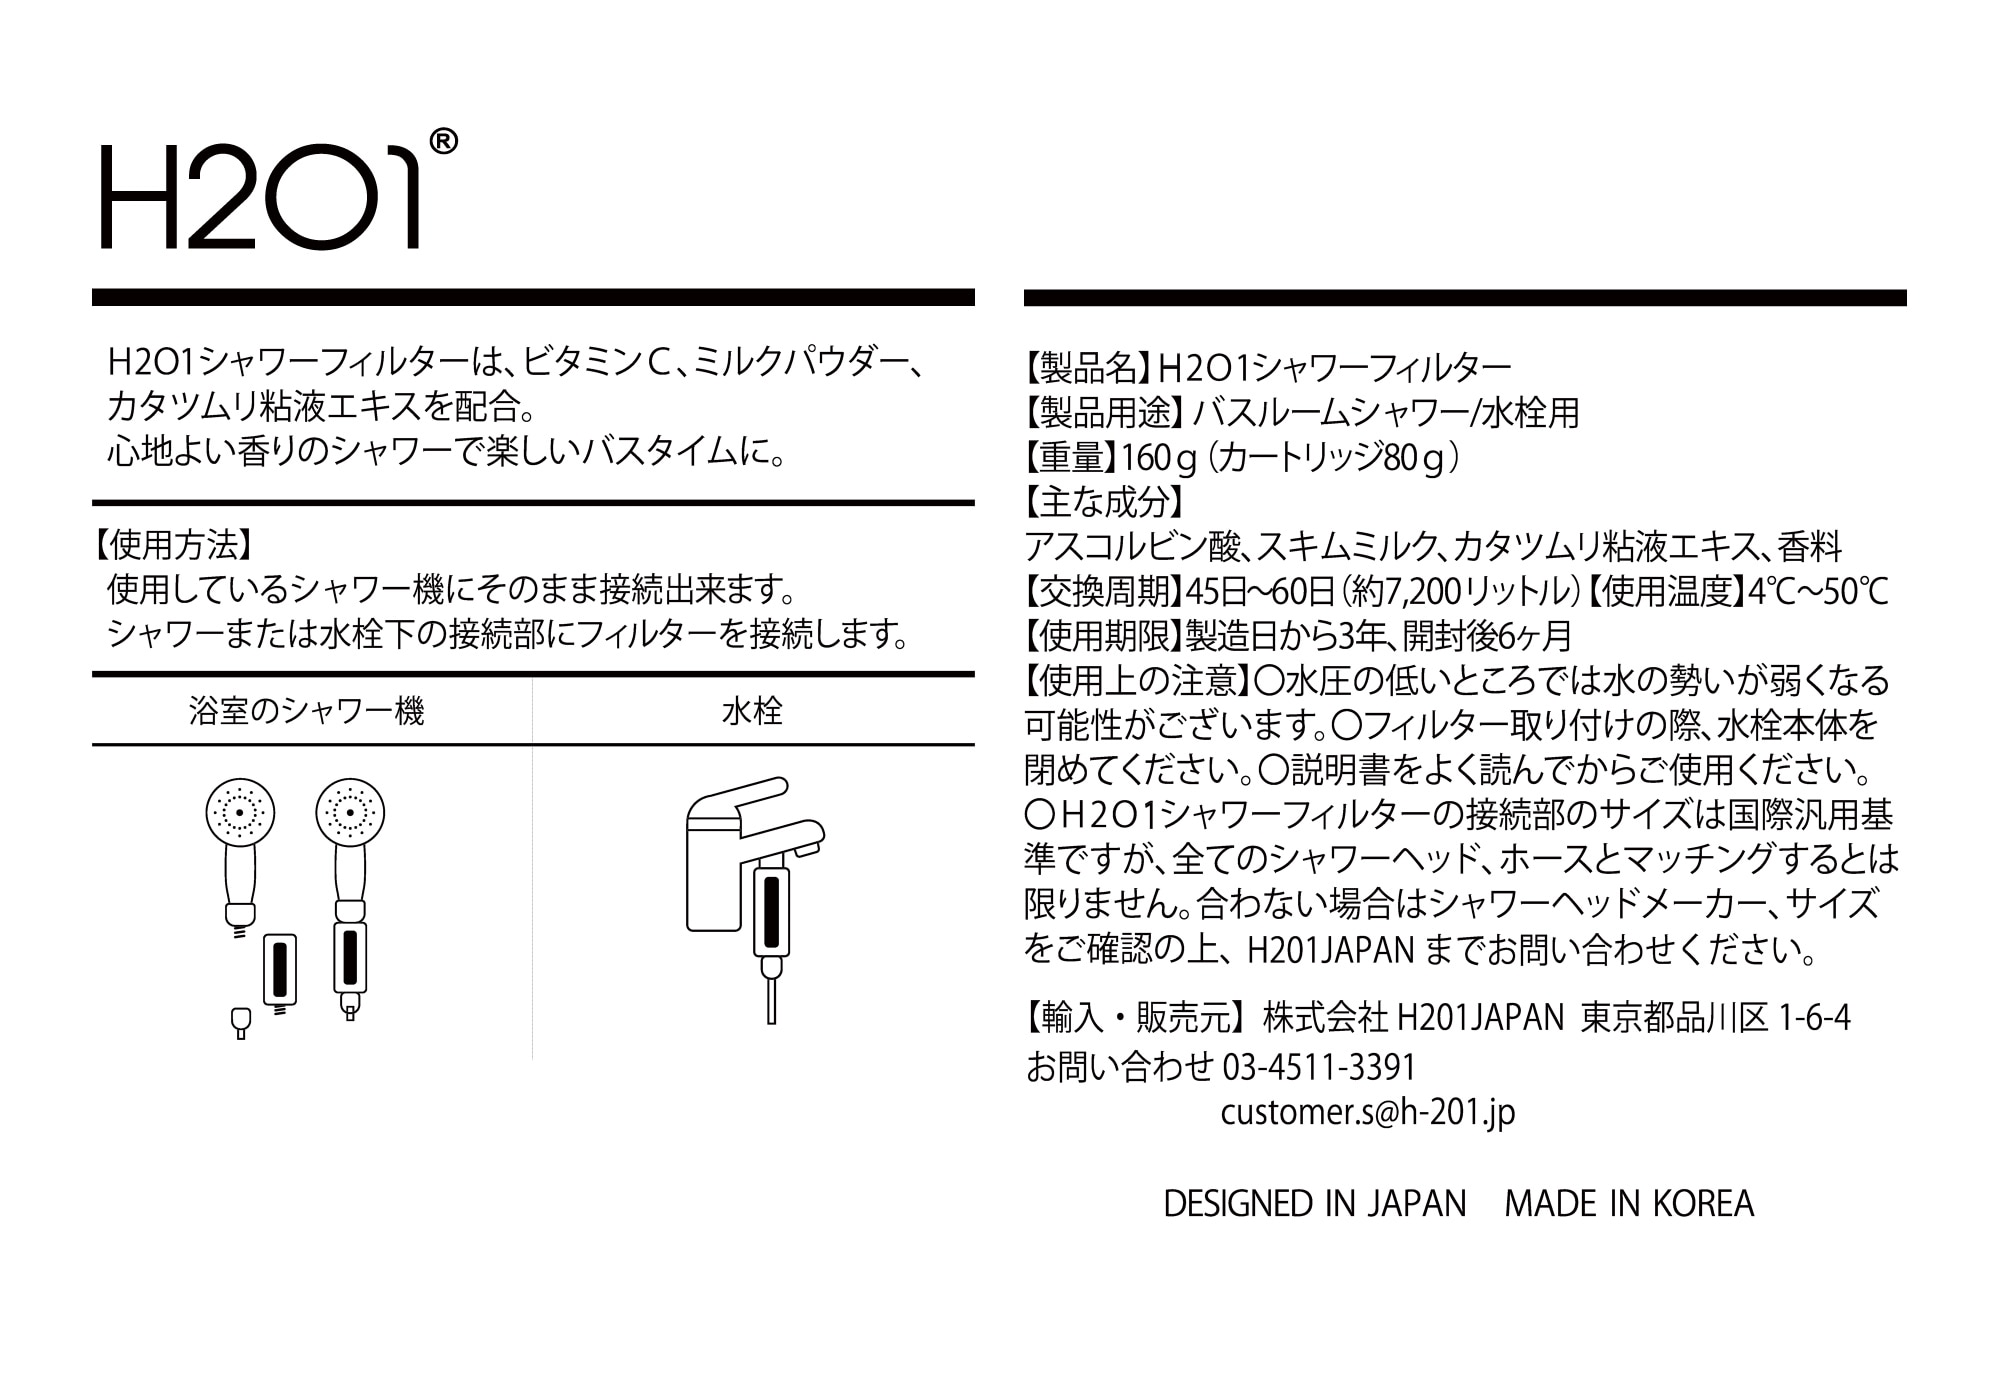 H201 シャワーフィルター 2個セット Costco Japan